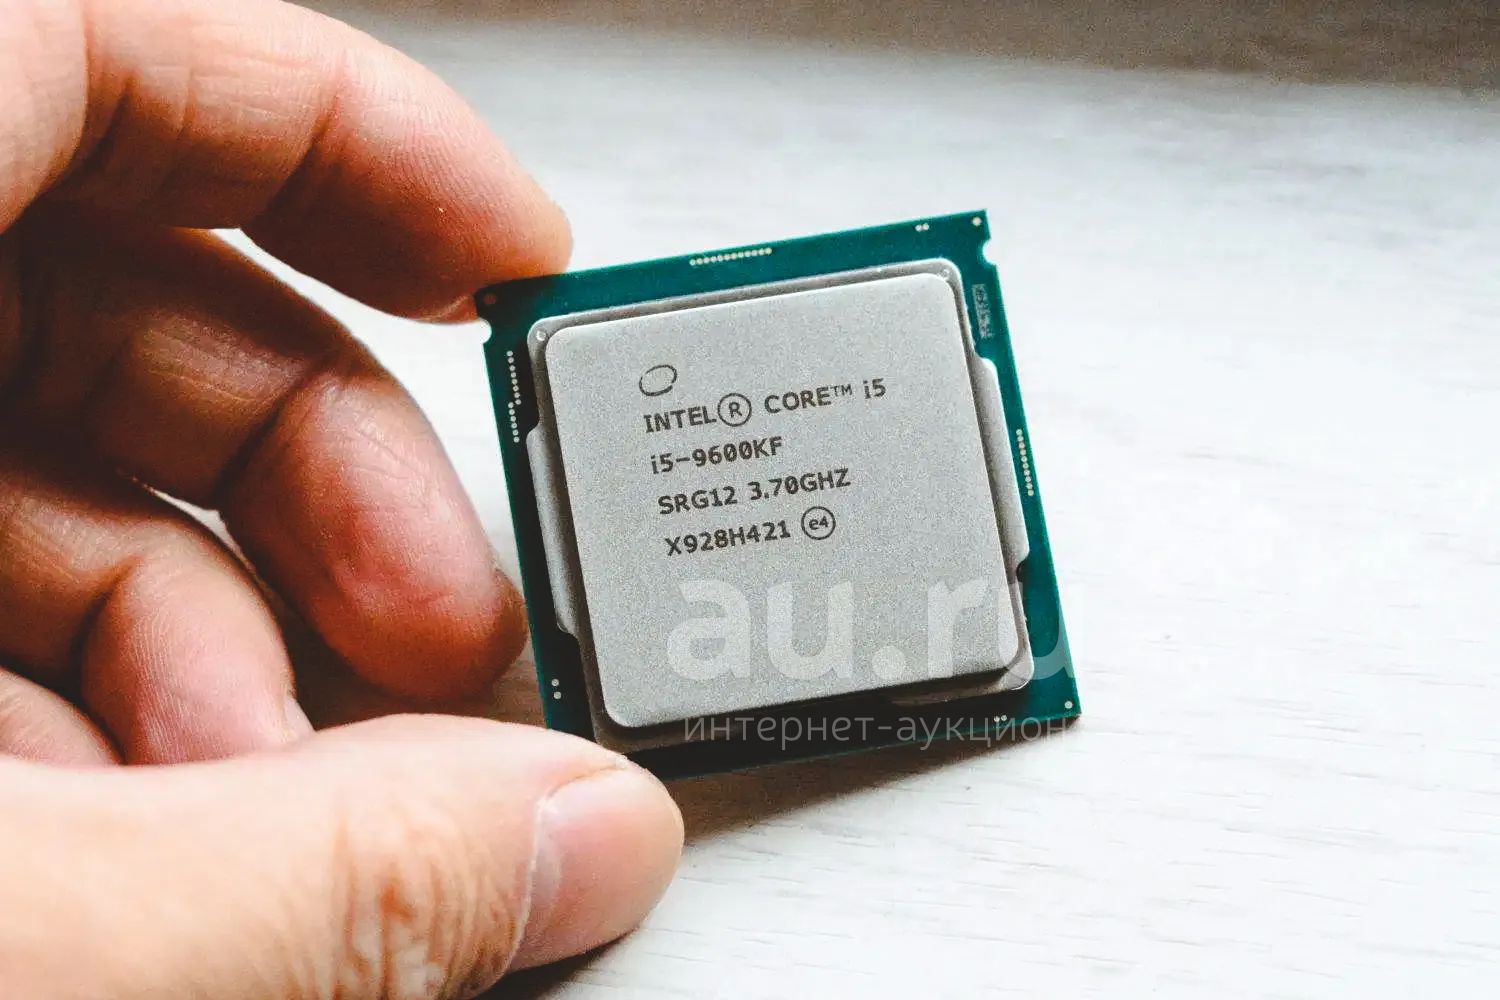 13600kf характеристики. Процессор Intel Core i5-9600kf. I5 9600kf. Core i5 12600kf. Интел кор i5 9600kf.